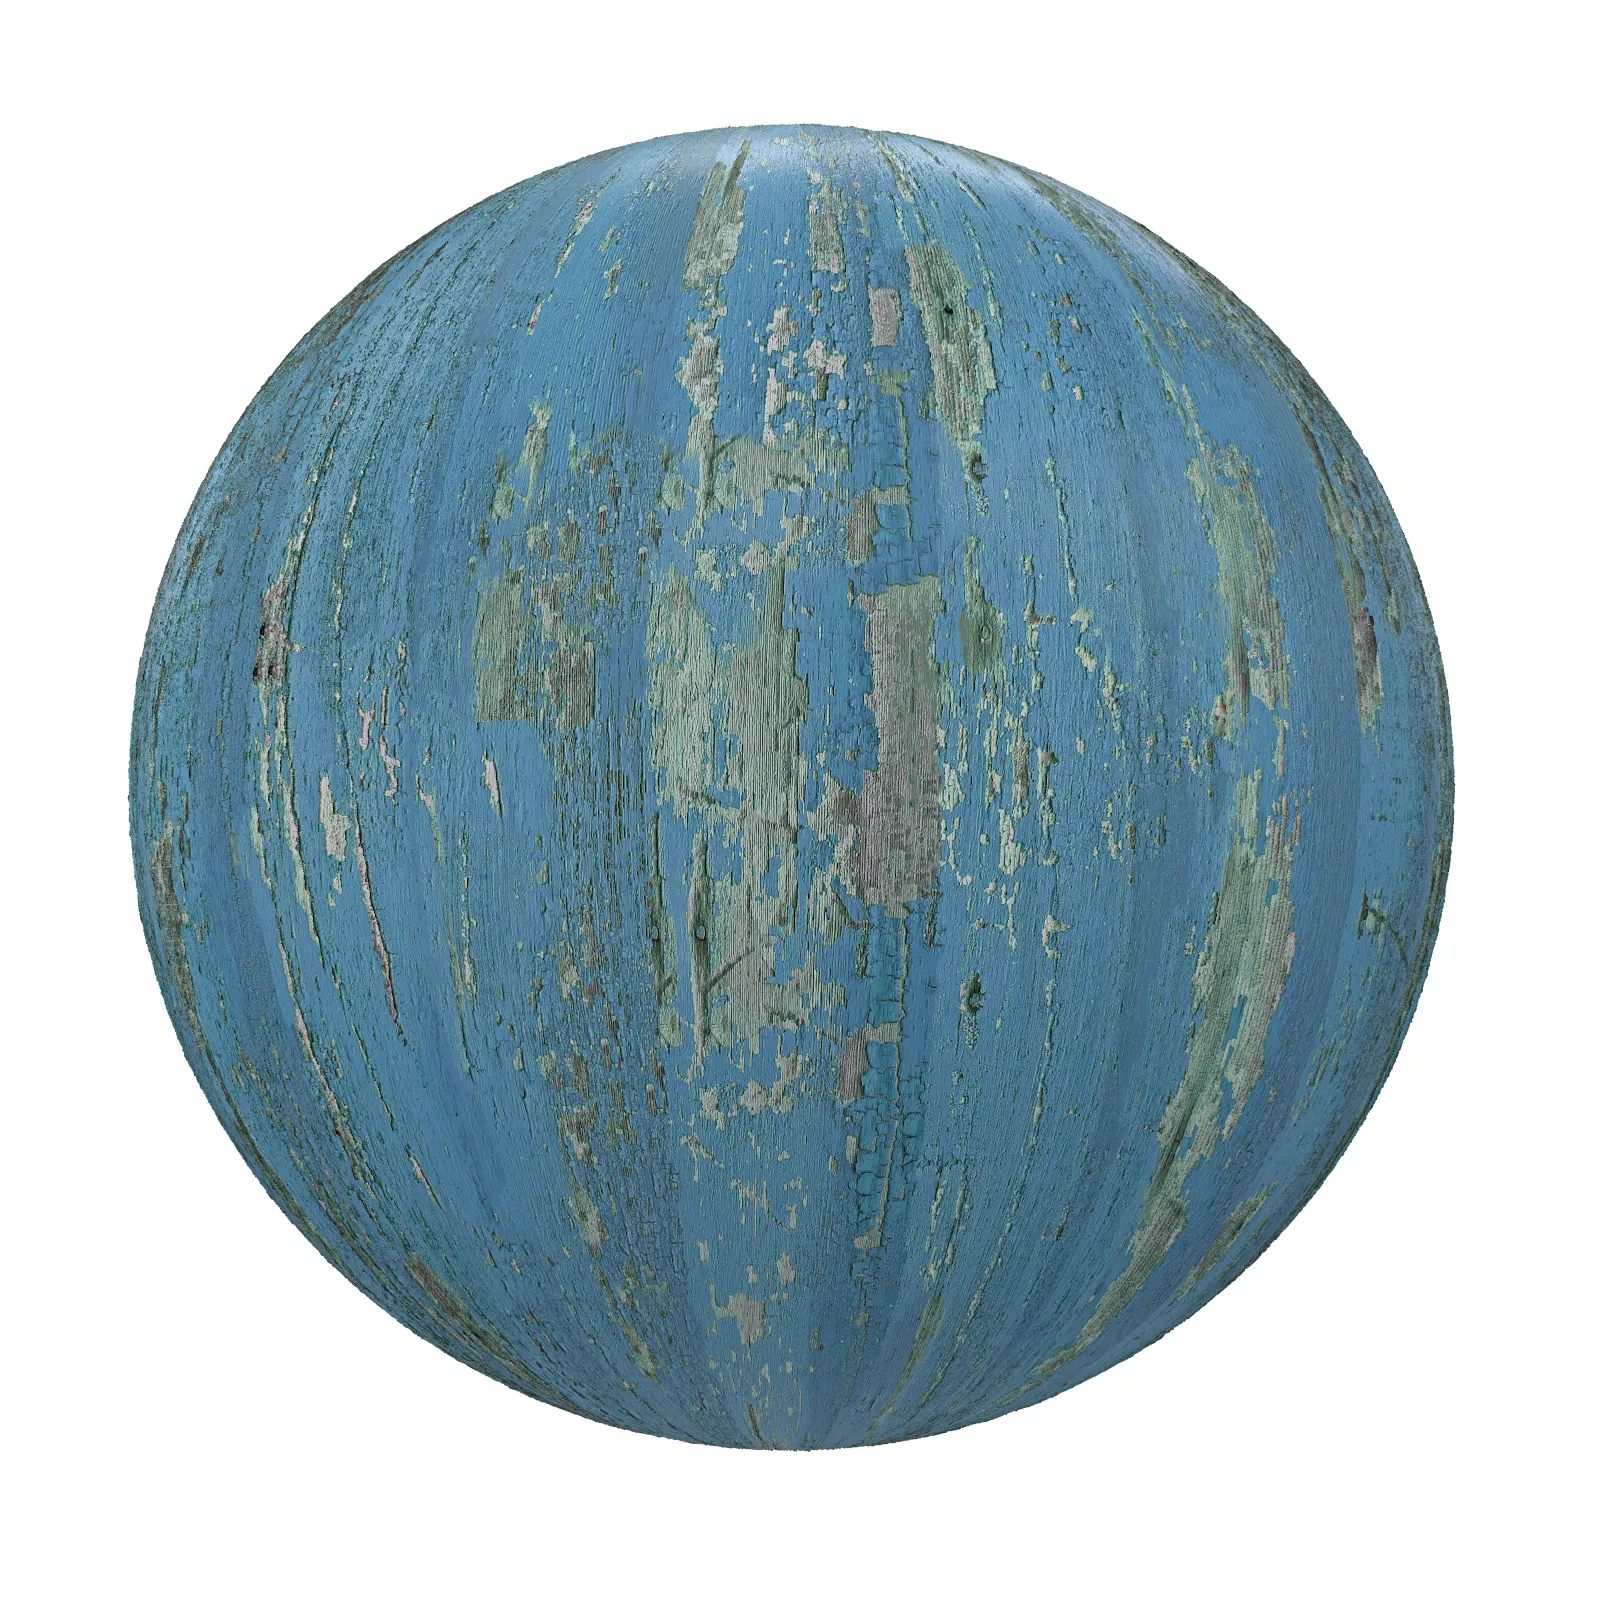 3ds Max Files – Texture – 8 – Wood Texture – 71 – Wood Texture by Minh Nguyen